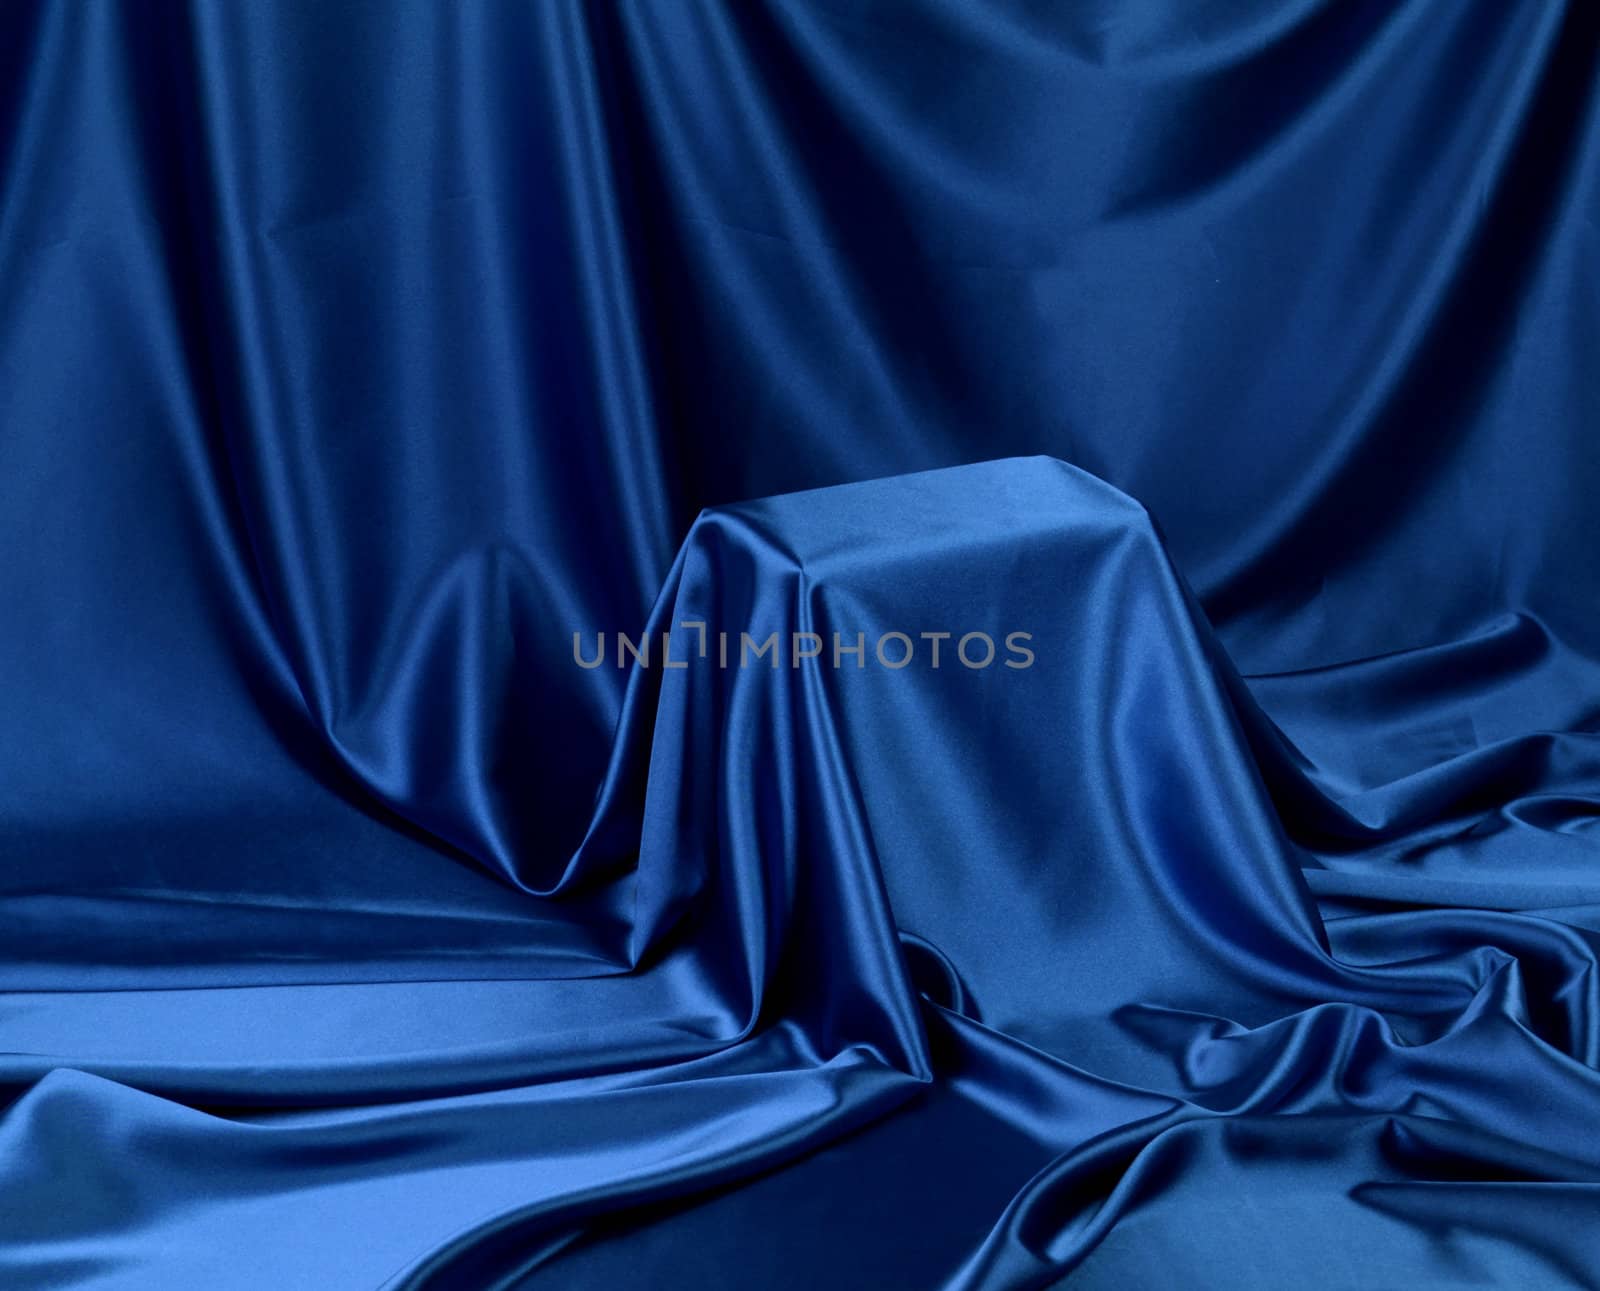 Something secret veiled under satin silky cloth fabric